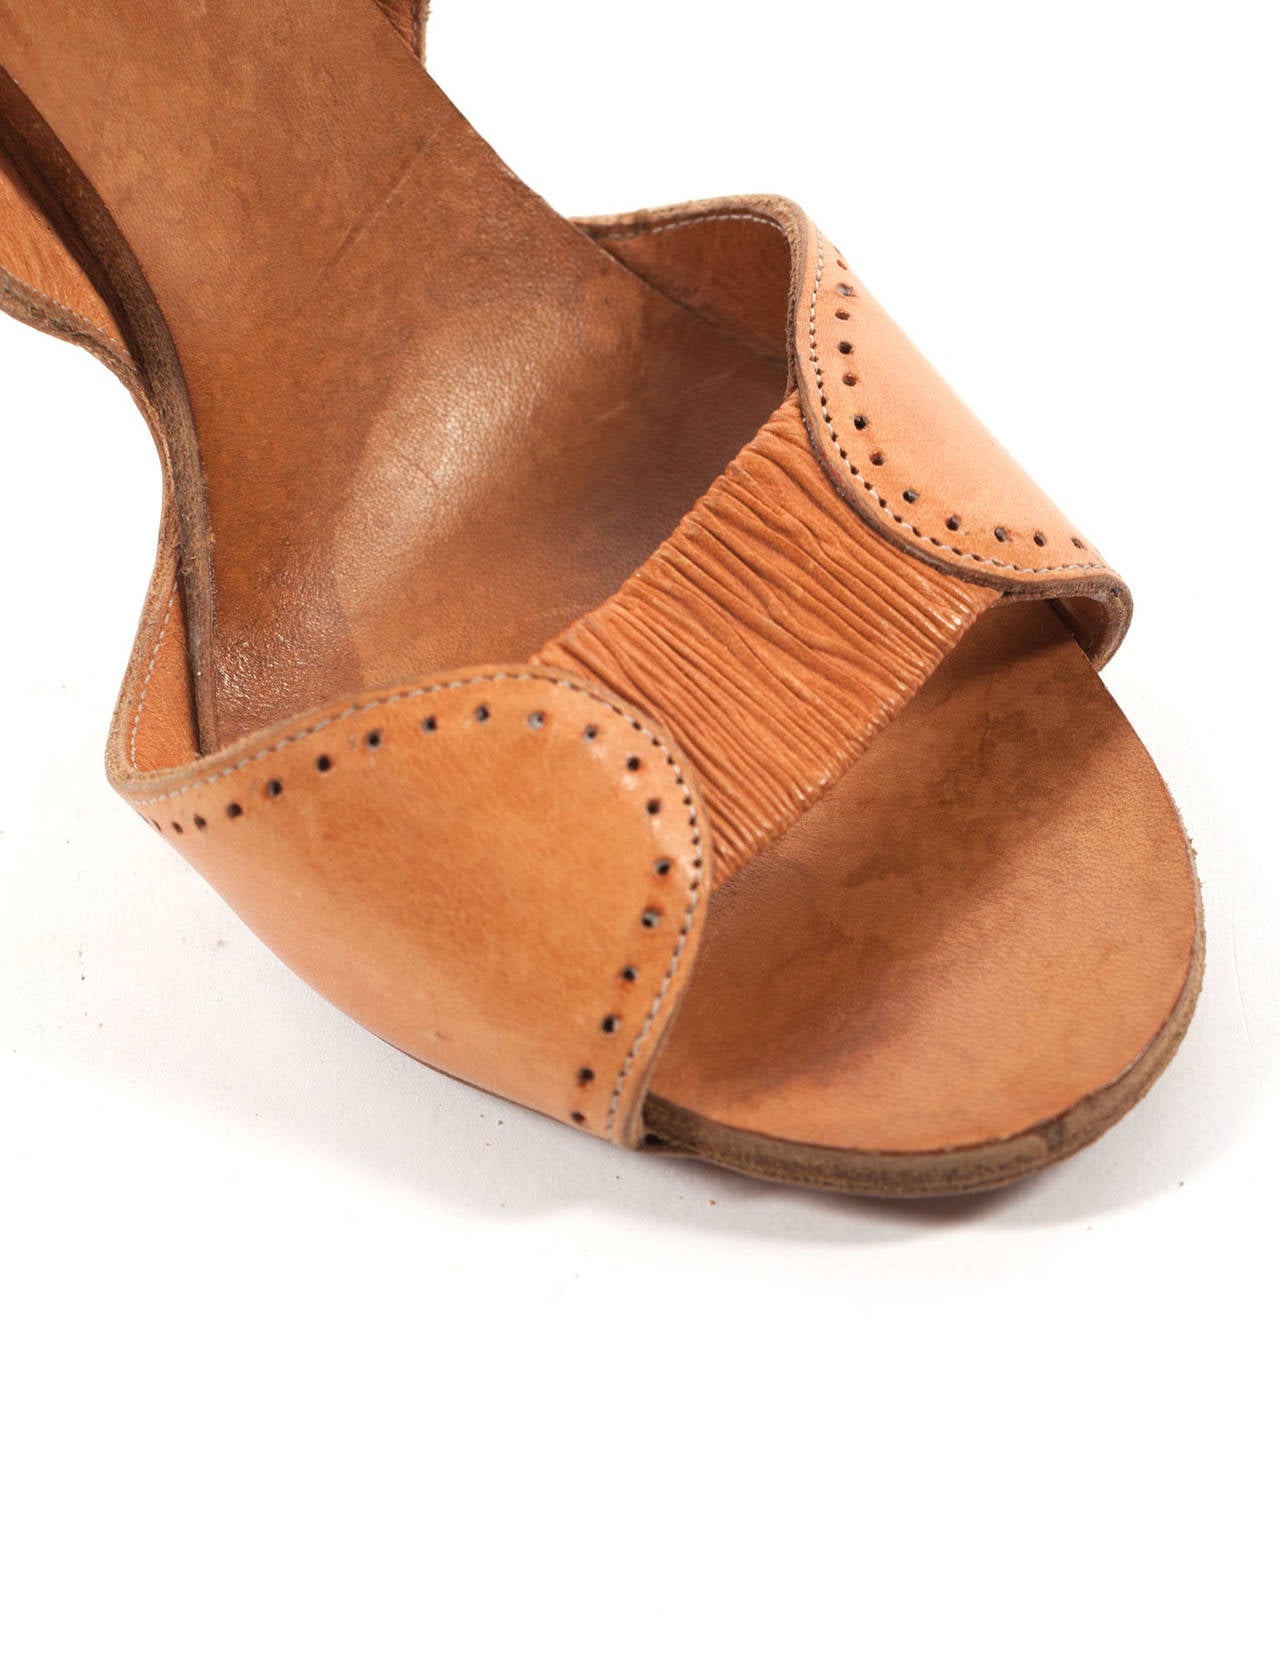 Chloe by Phoebe Philo Criss cross tan leather stilettos, Sz. 8.5 3